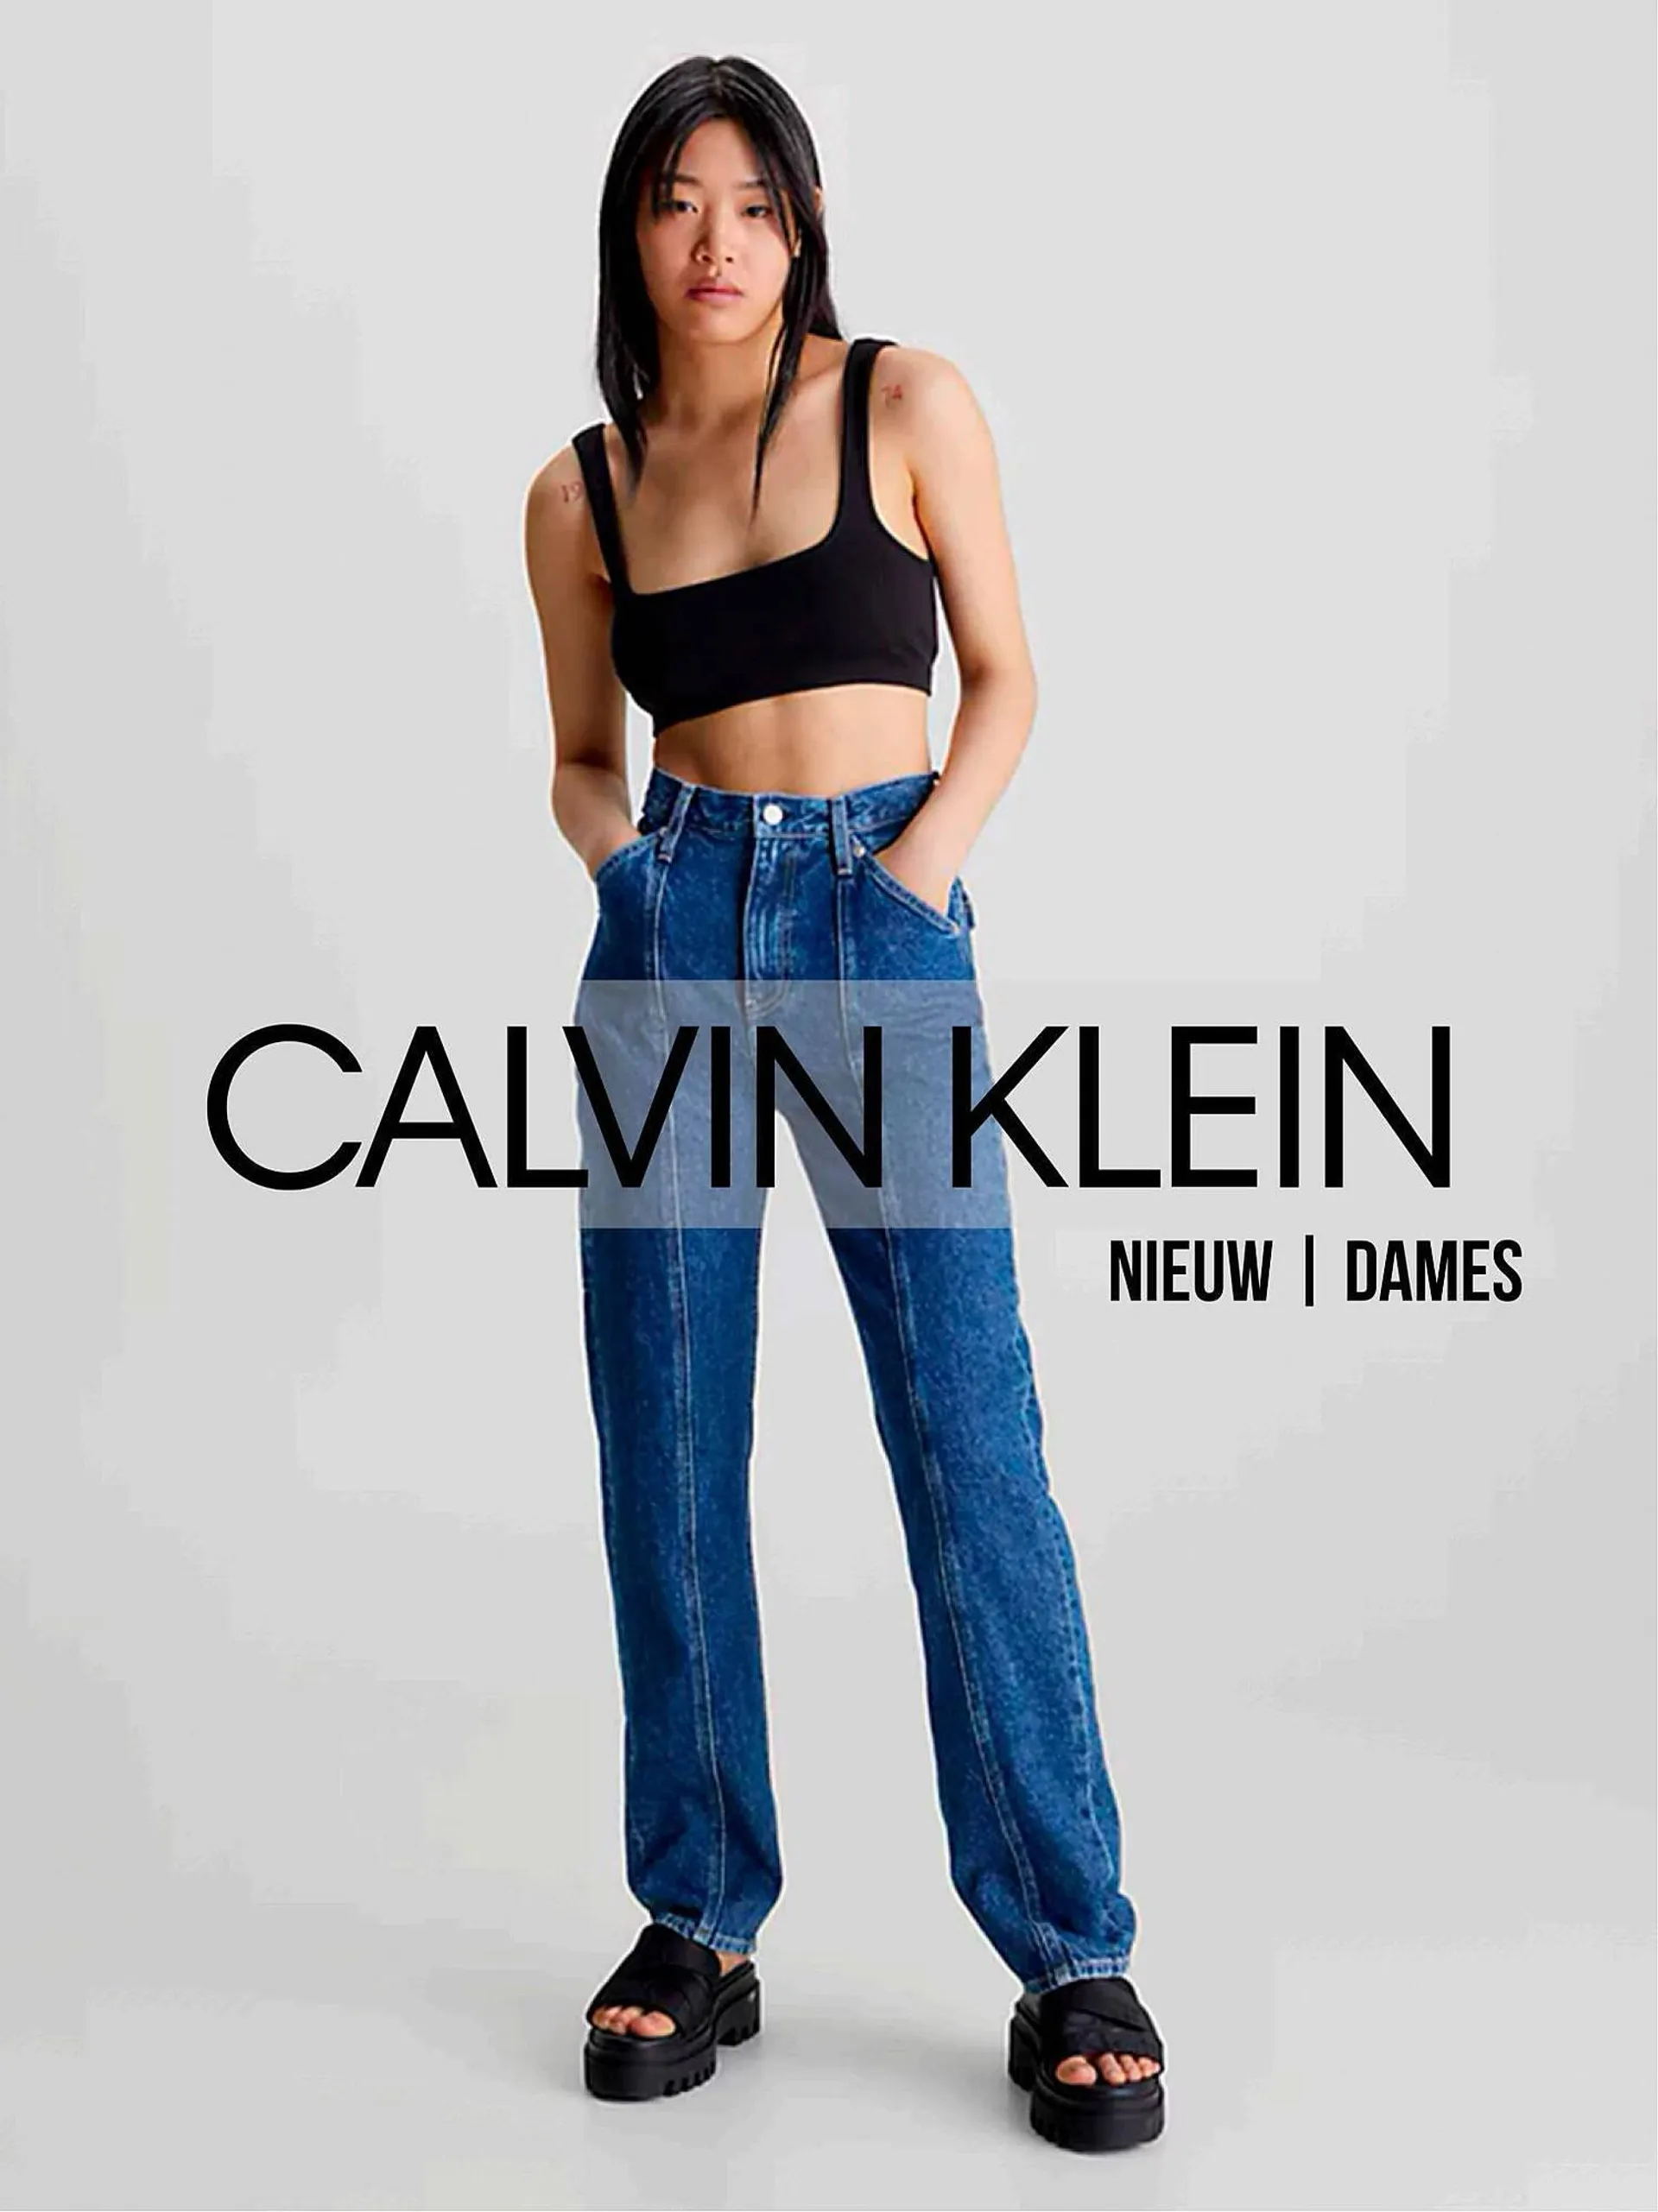 Calvin Klein folder - 1